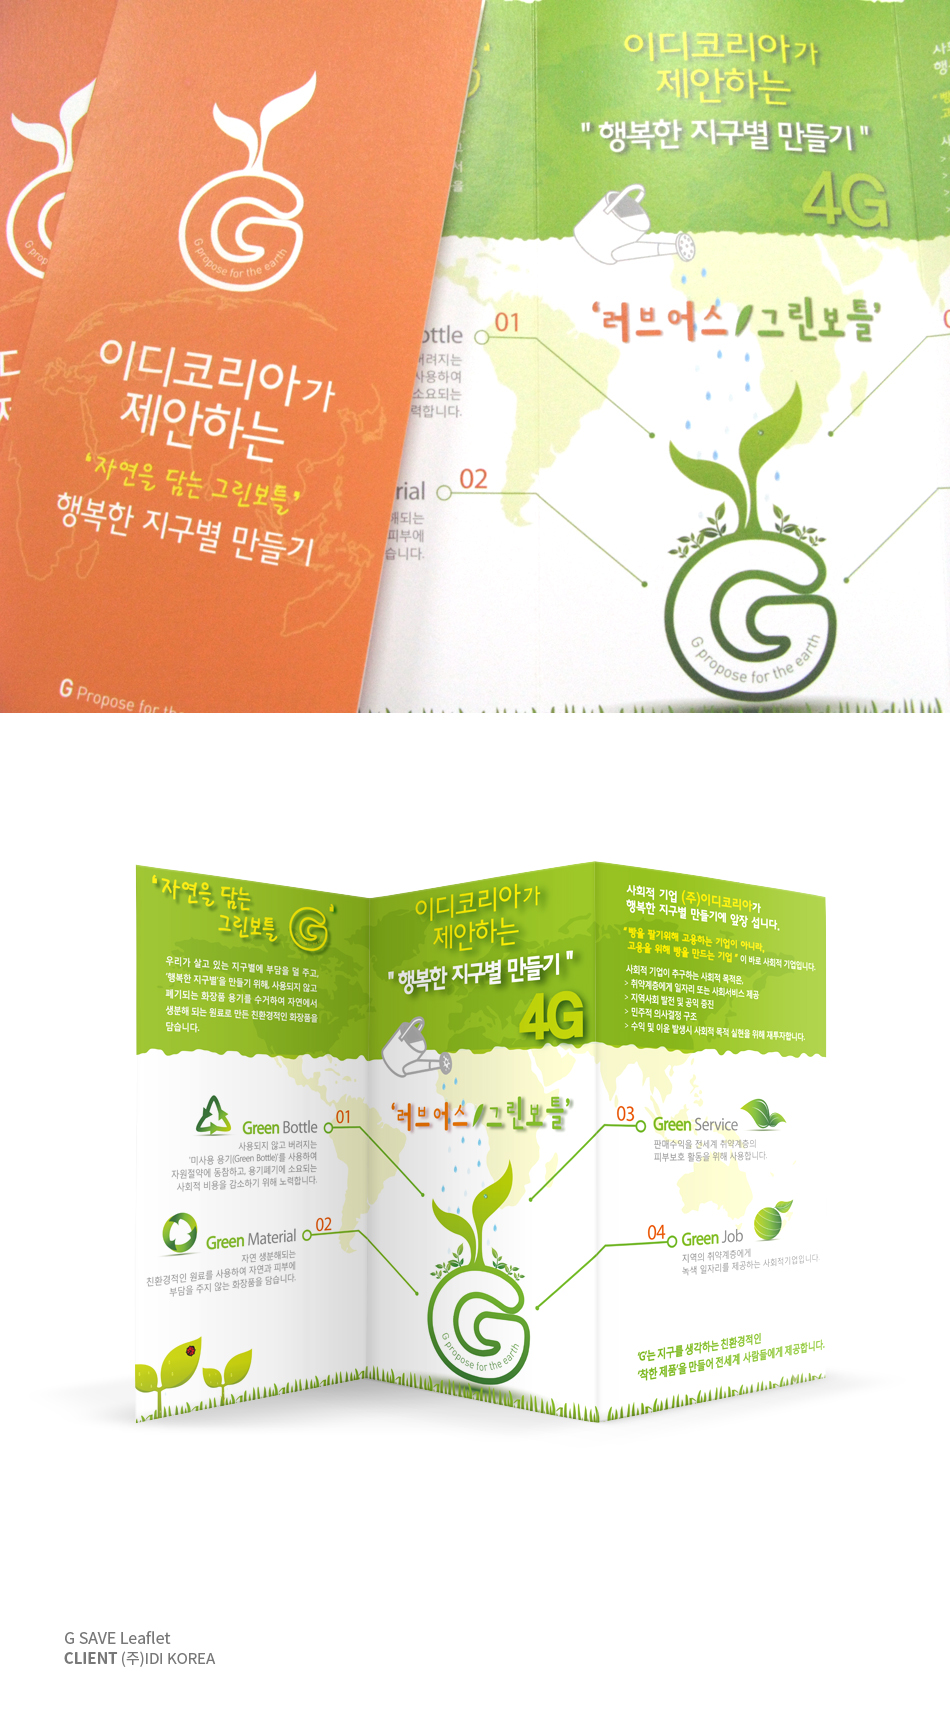 G SAVE leaflet - CLIENT (주) IDI KOREA 2012